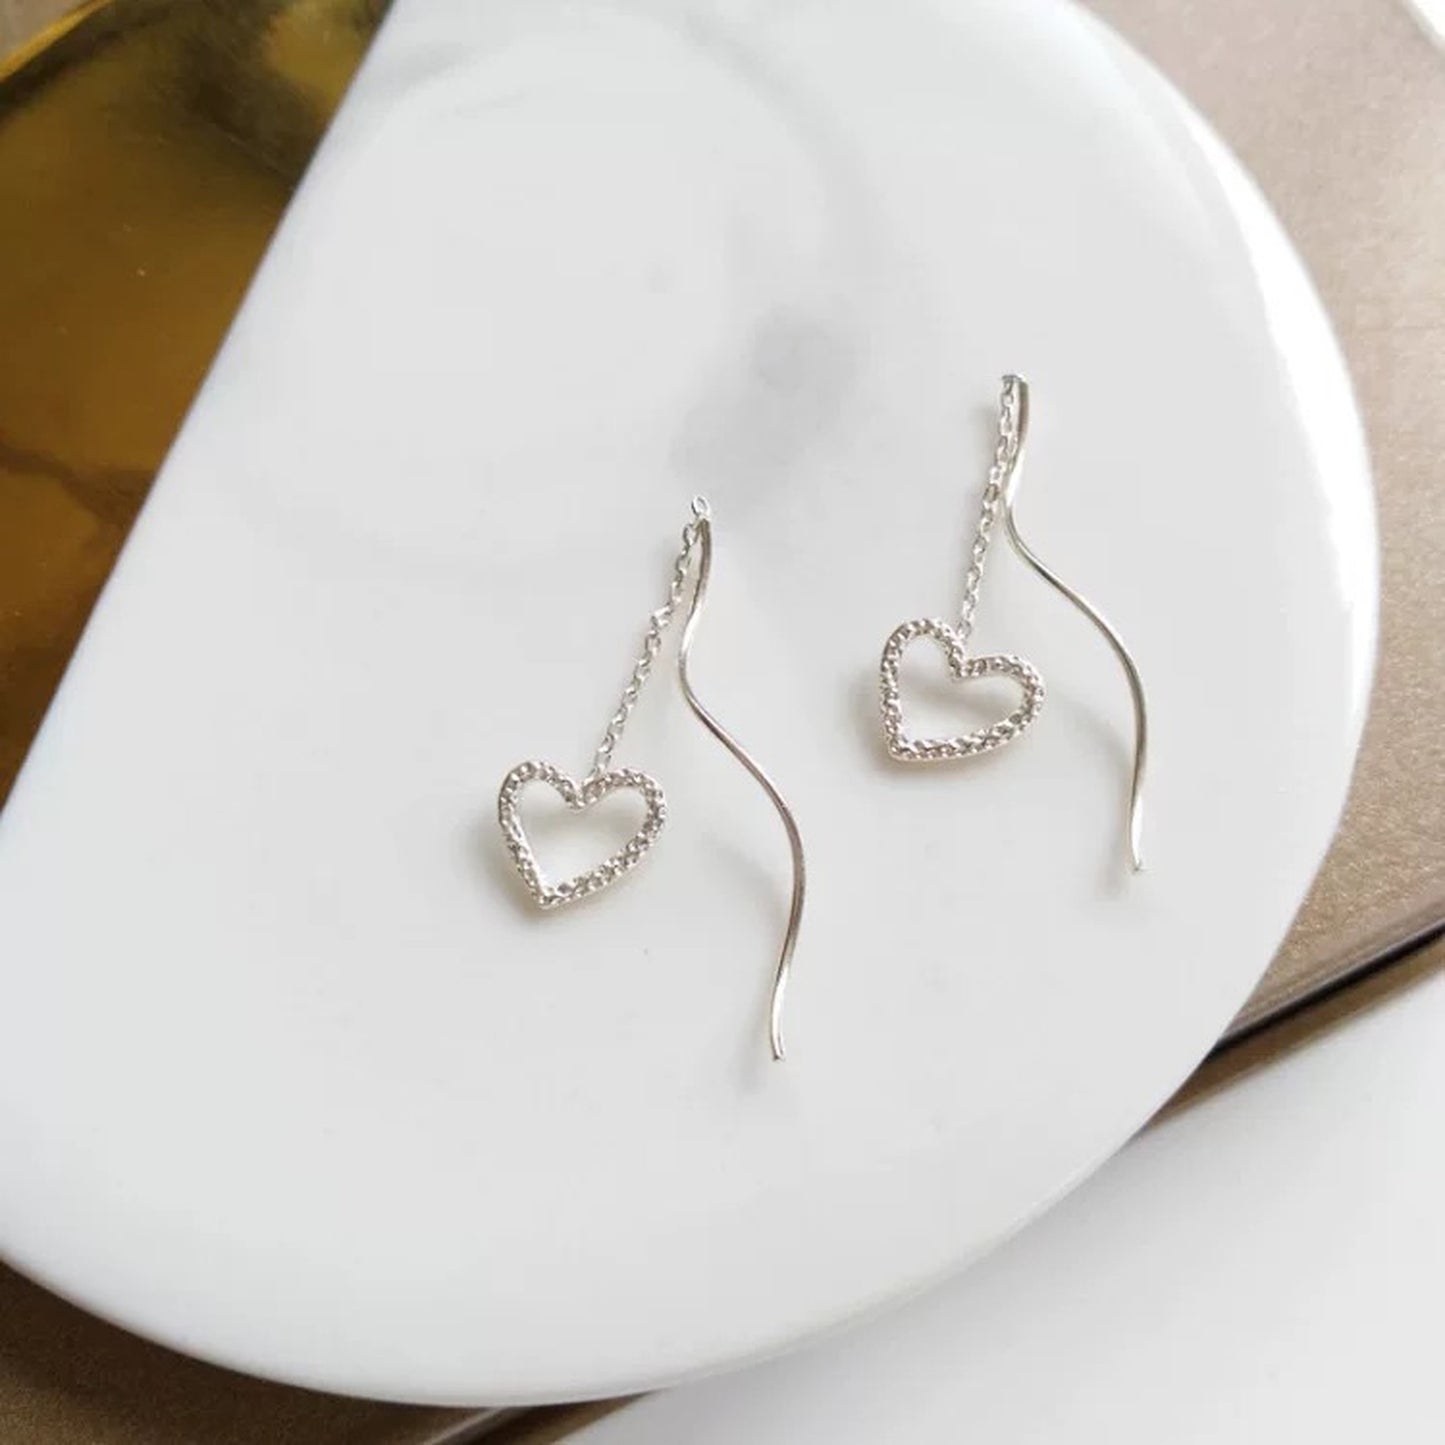 Dainty silver threader earrings, Spiral wave earrings, Minimalist heart earrings, Silver bridesmaid wedding earrings, Dainty charm threaders